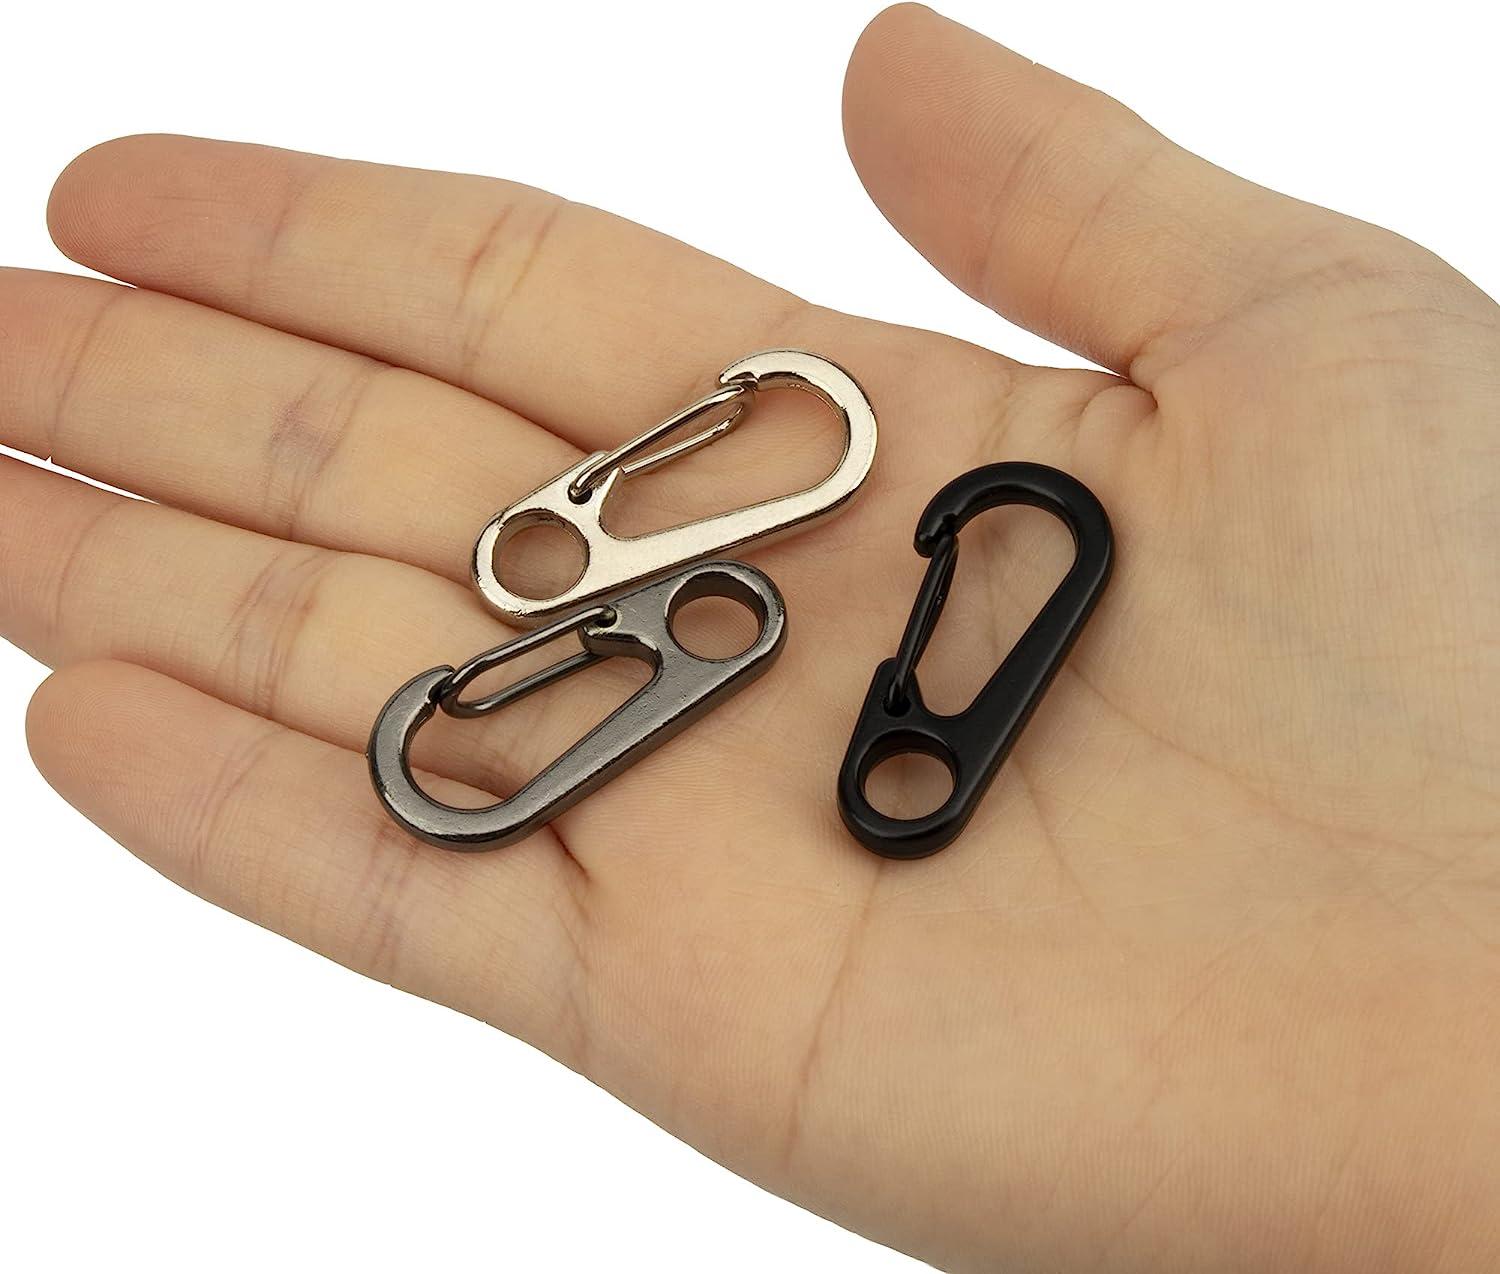 Mini Carabiner Clip Snap Hooks for Keychains Backpack Bottles